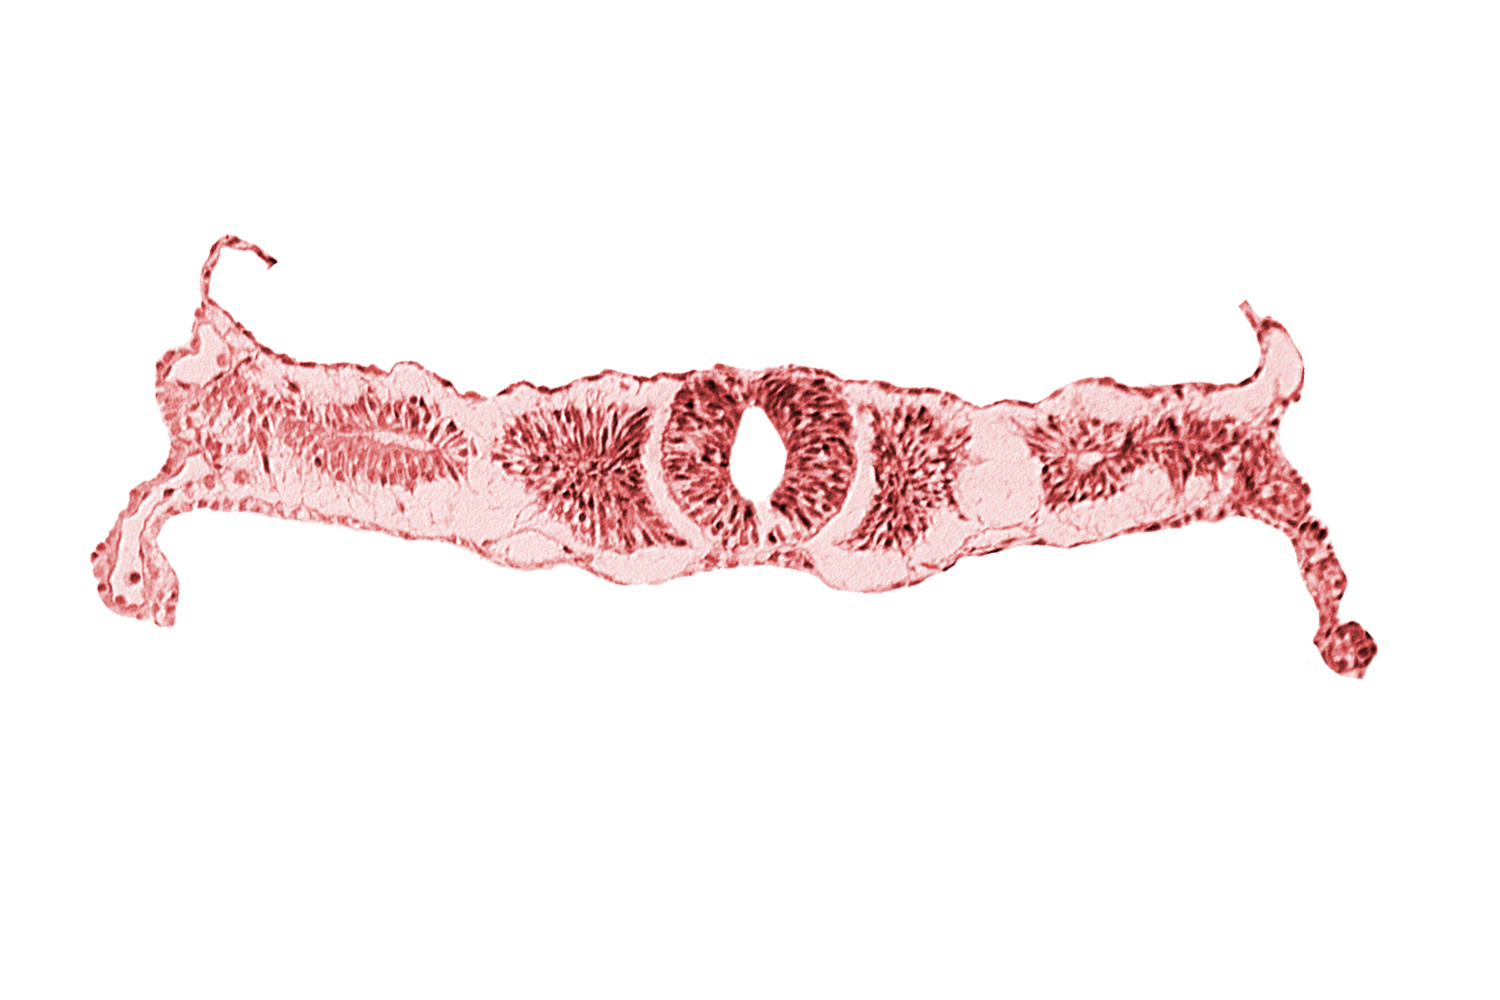 caudal end of somite 3 (O-3), dorsal aorta, endoderm, midgut, sulcus limitans, surface ectoderm